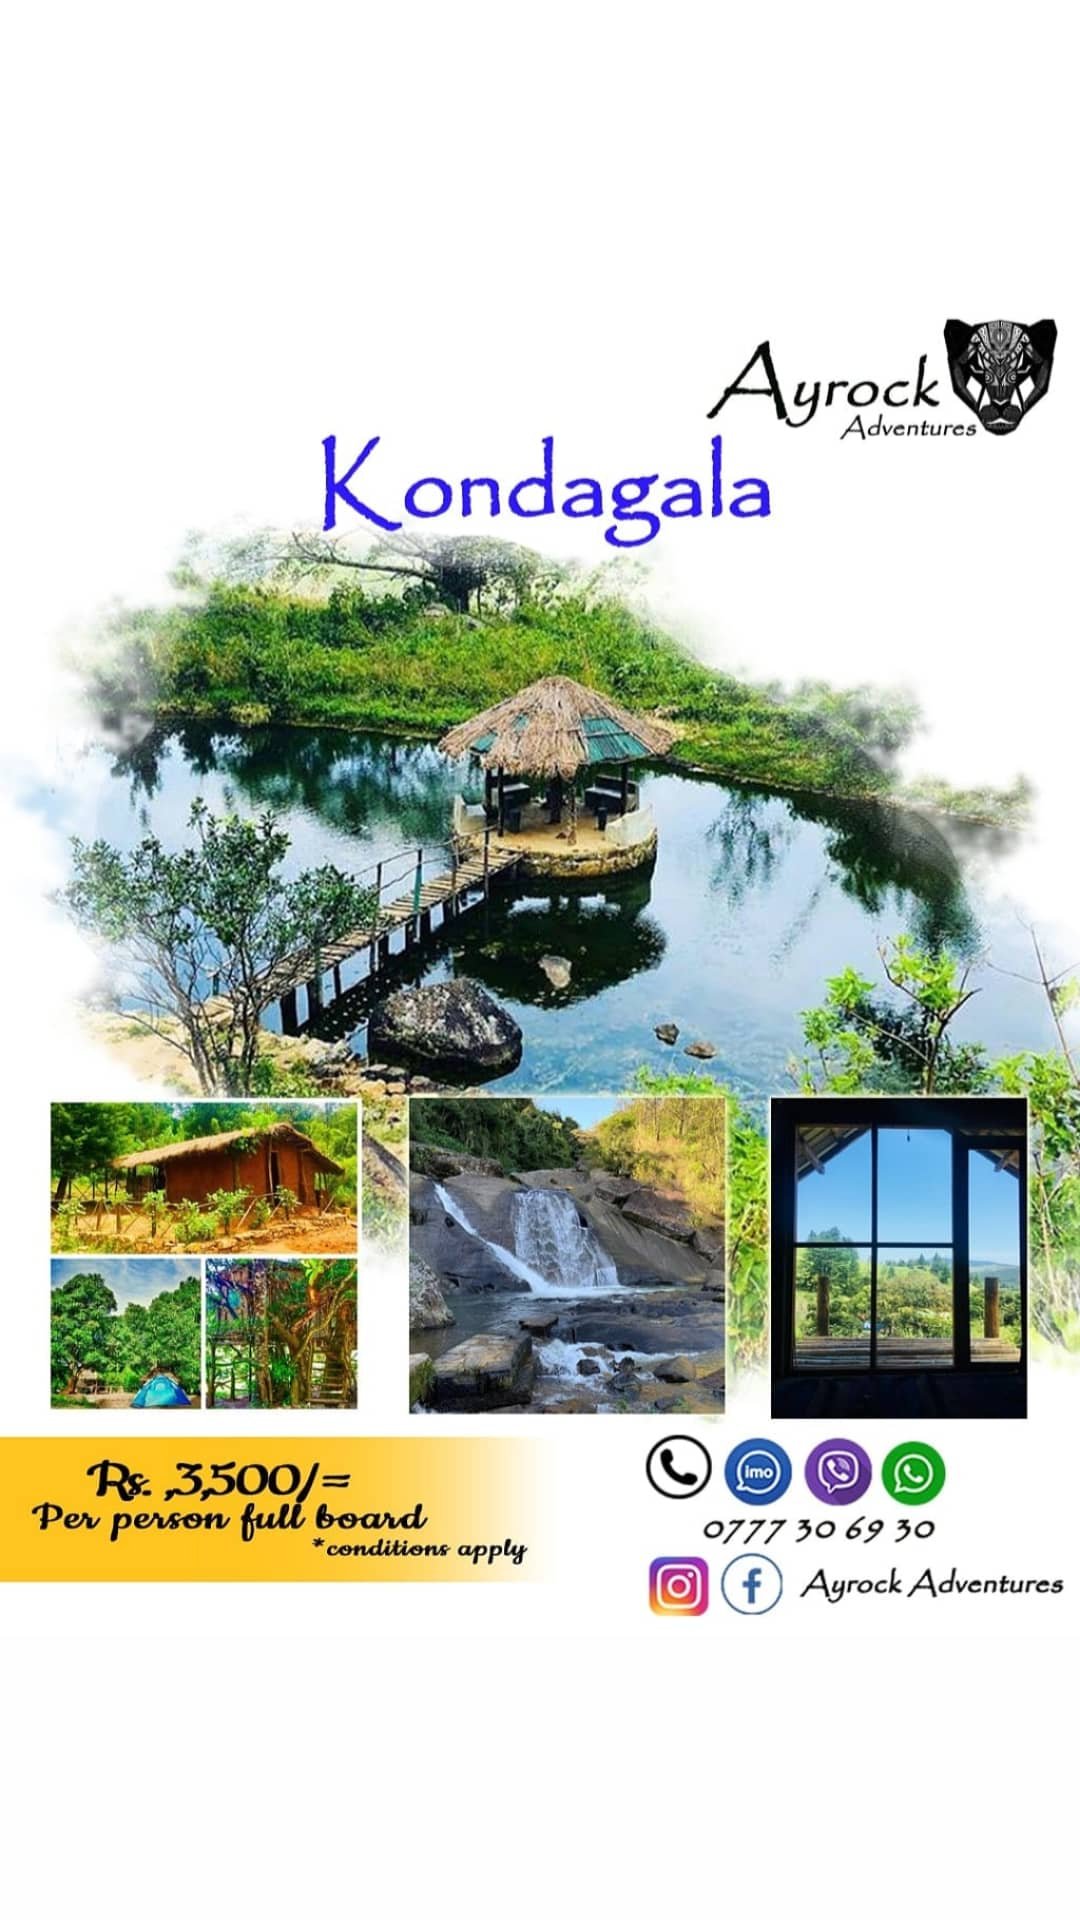 Adventure Package At Kondagala